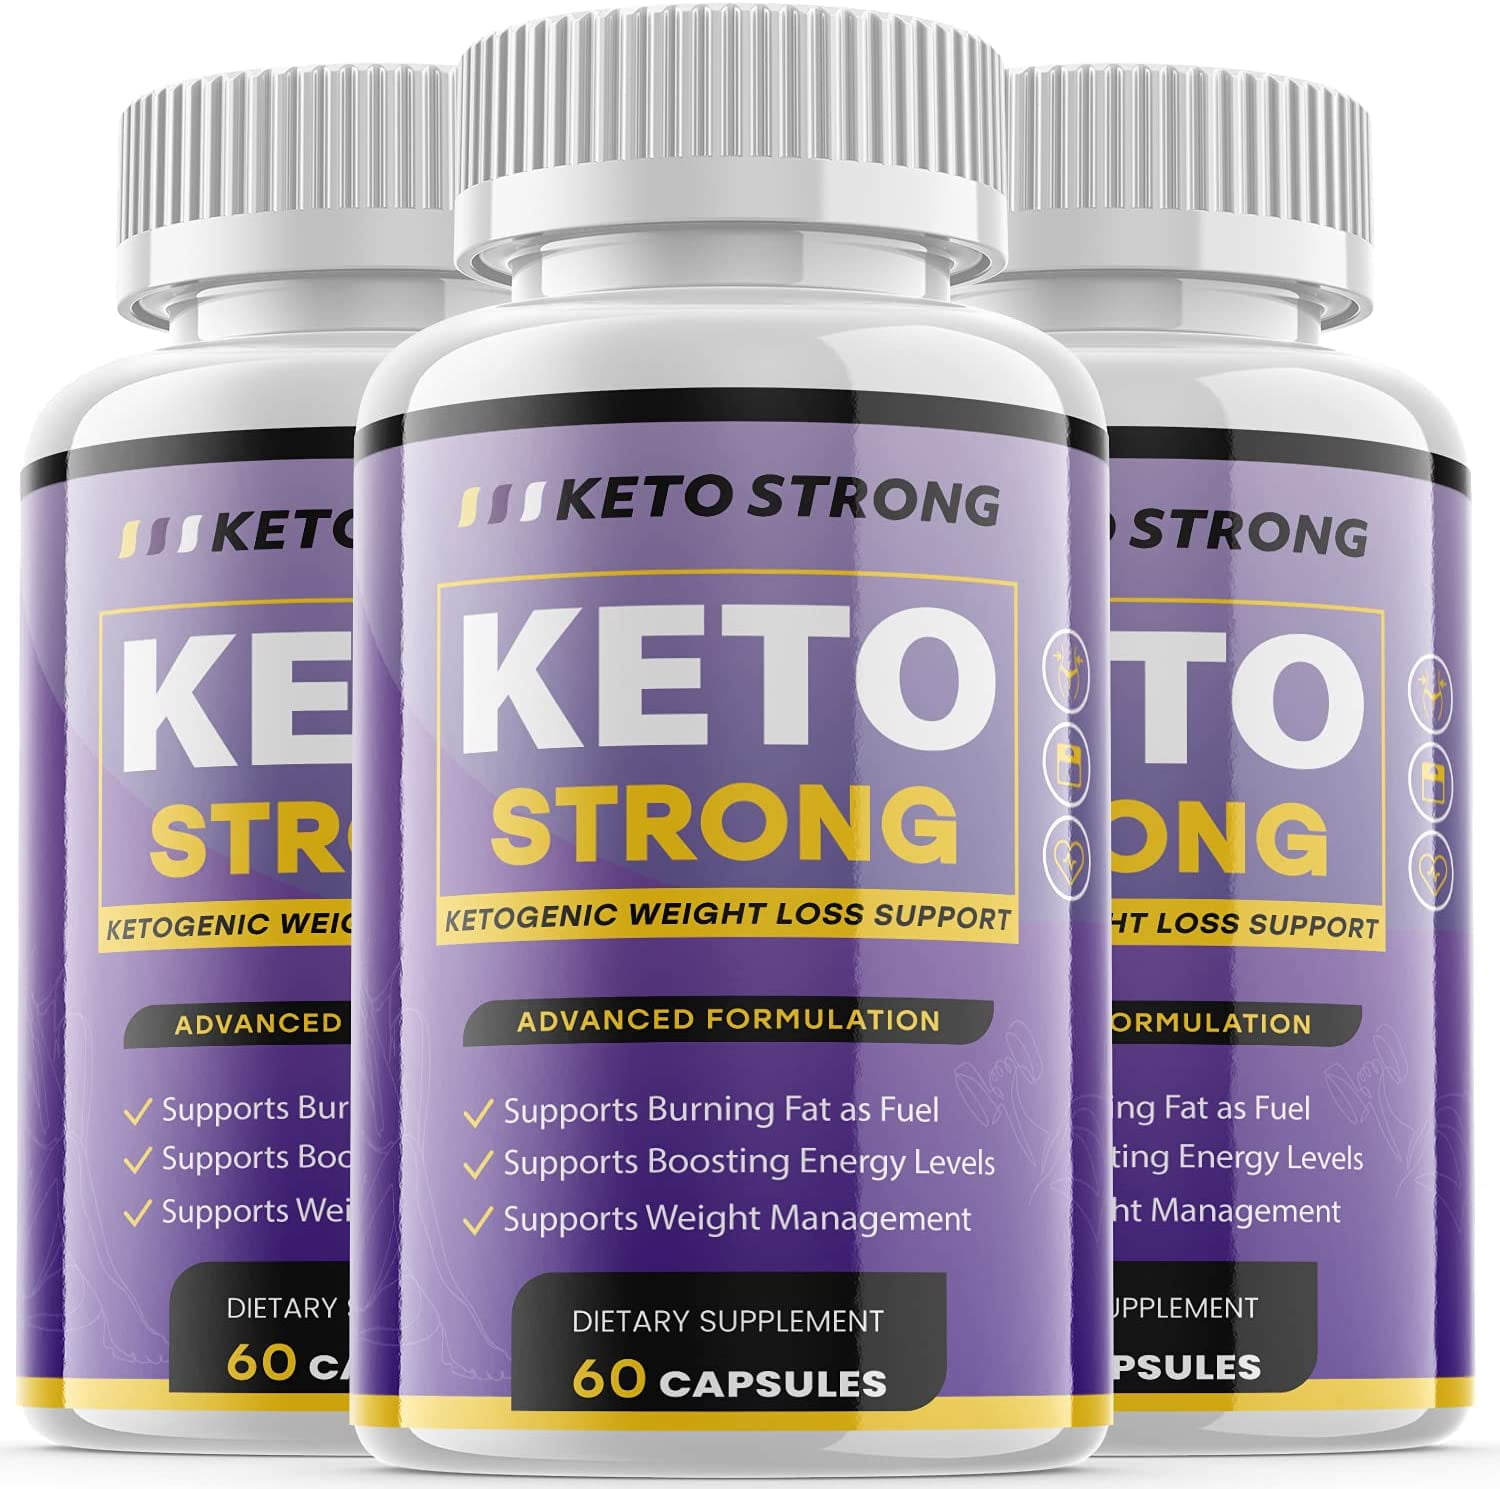 Keto Trim Fast Reviews: Diet Pills That Work or Cheap Formula? -  HeraldNet.com